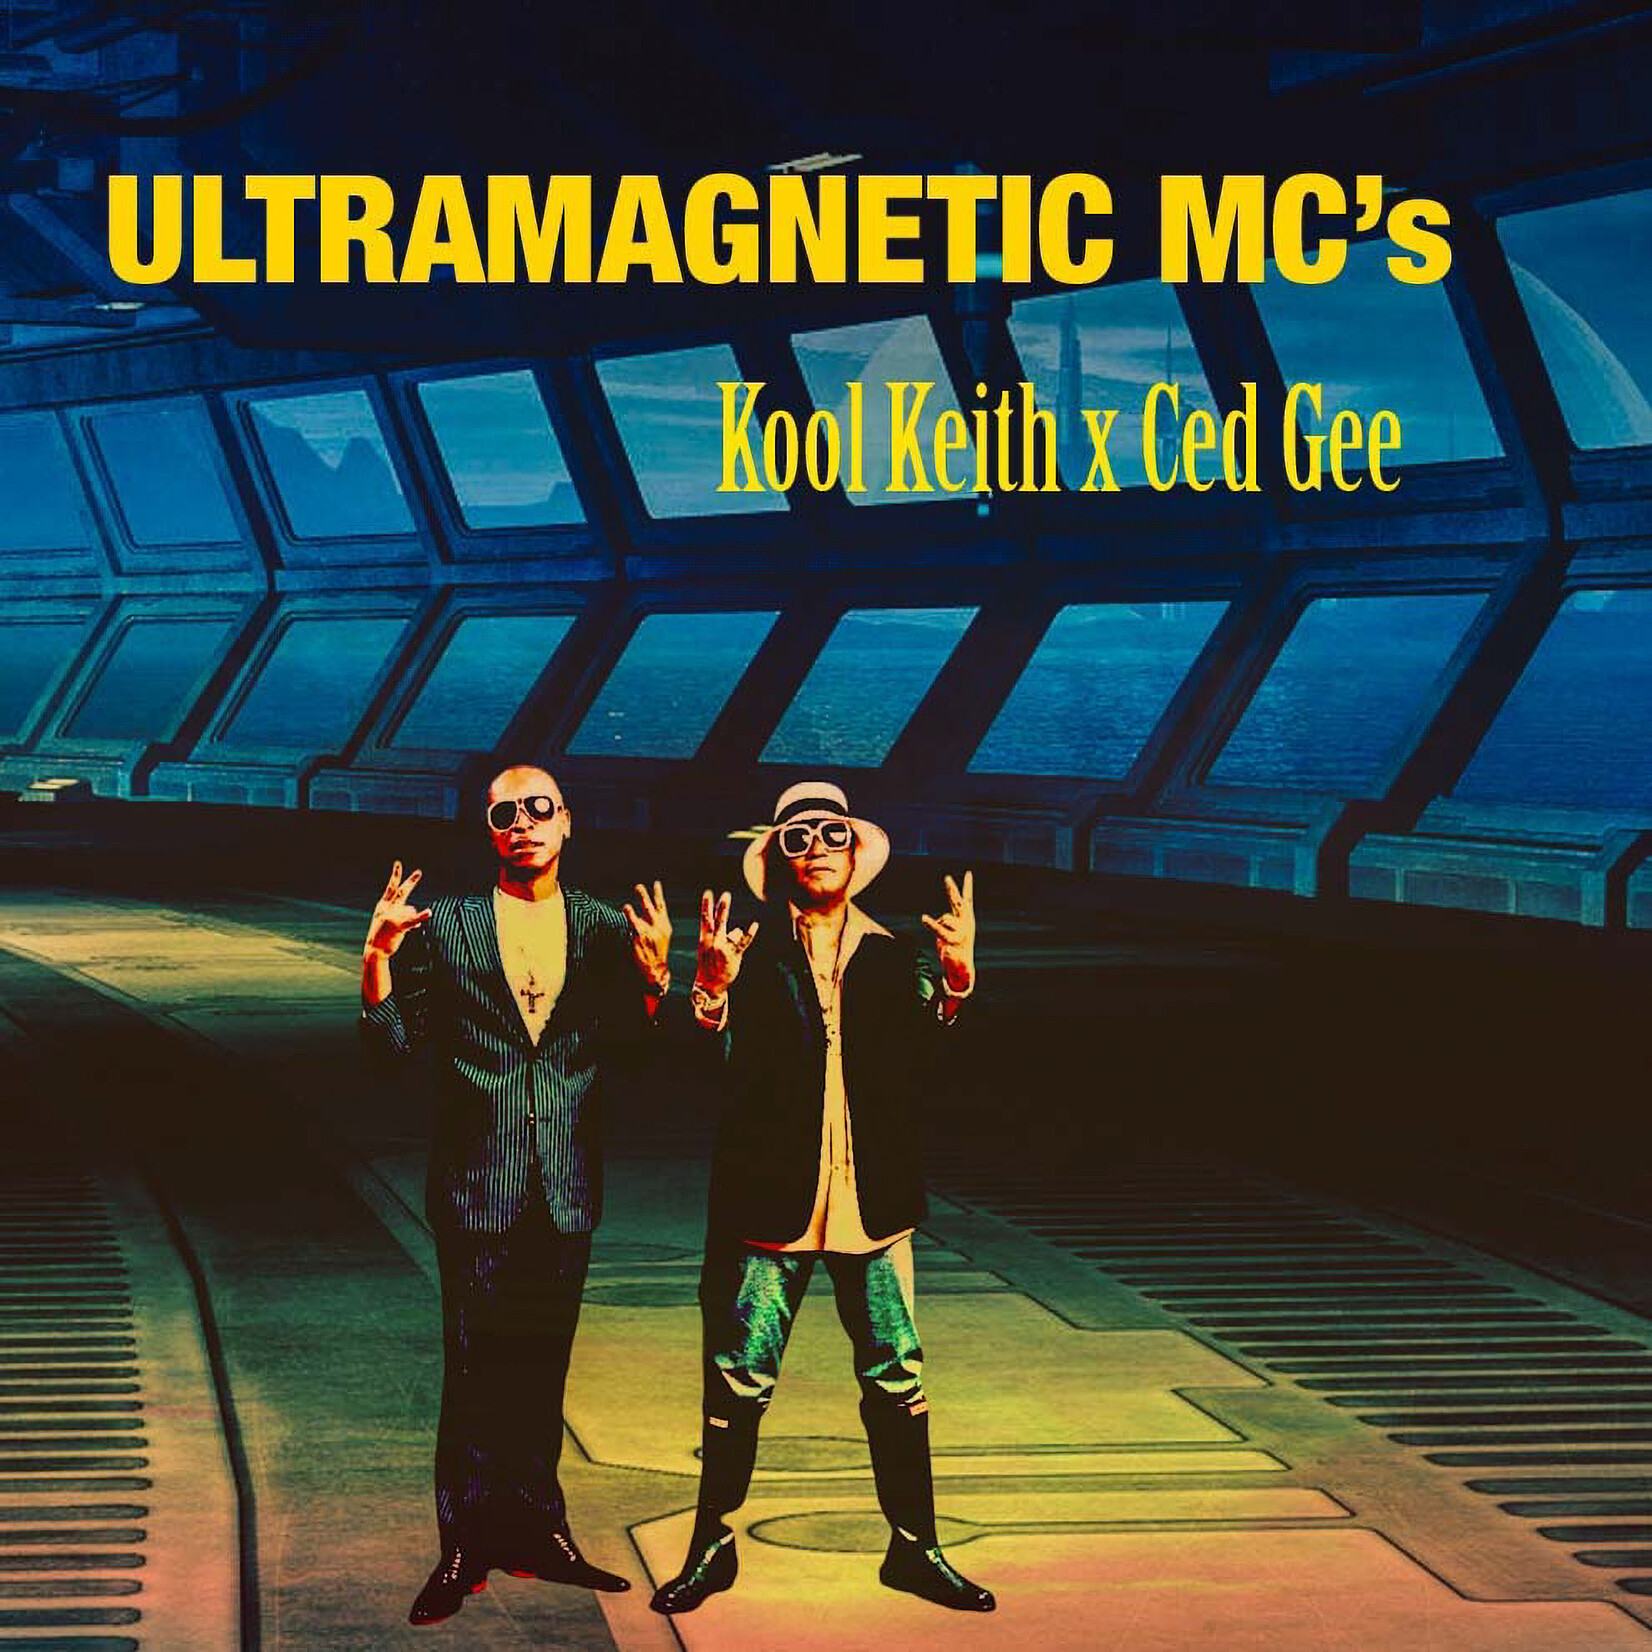 Ultramagnetic MC's - Kool Keith x Ced Gee [LP]